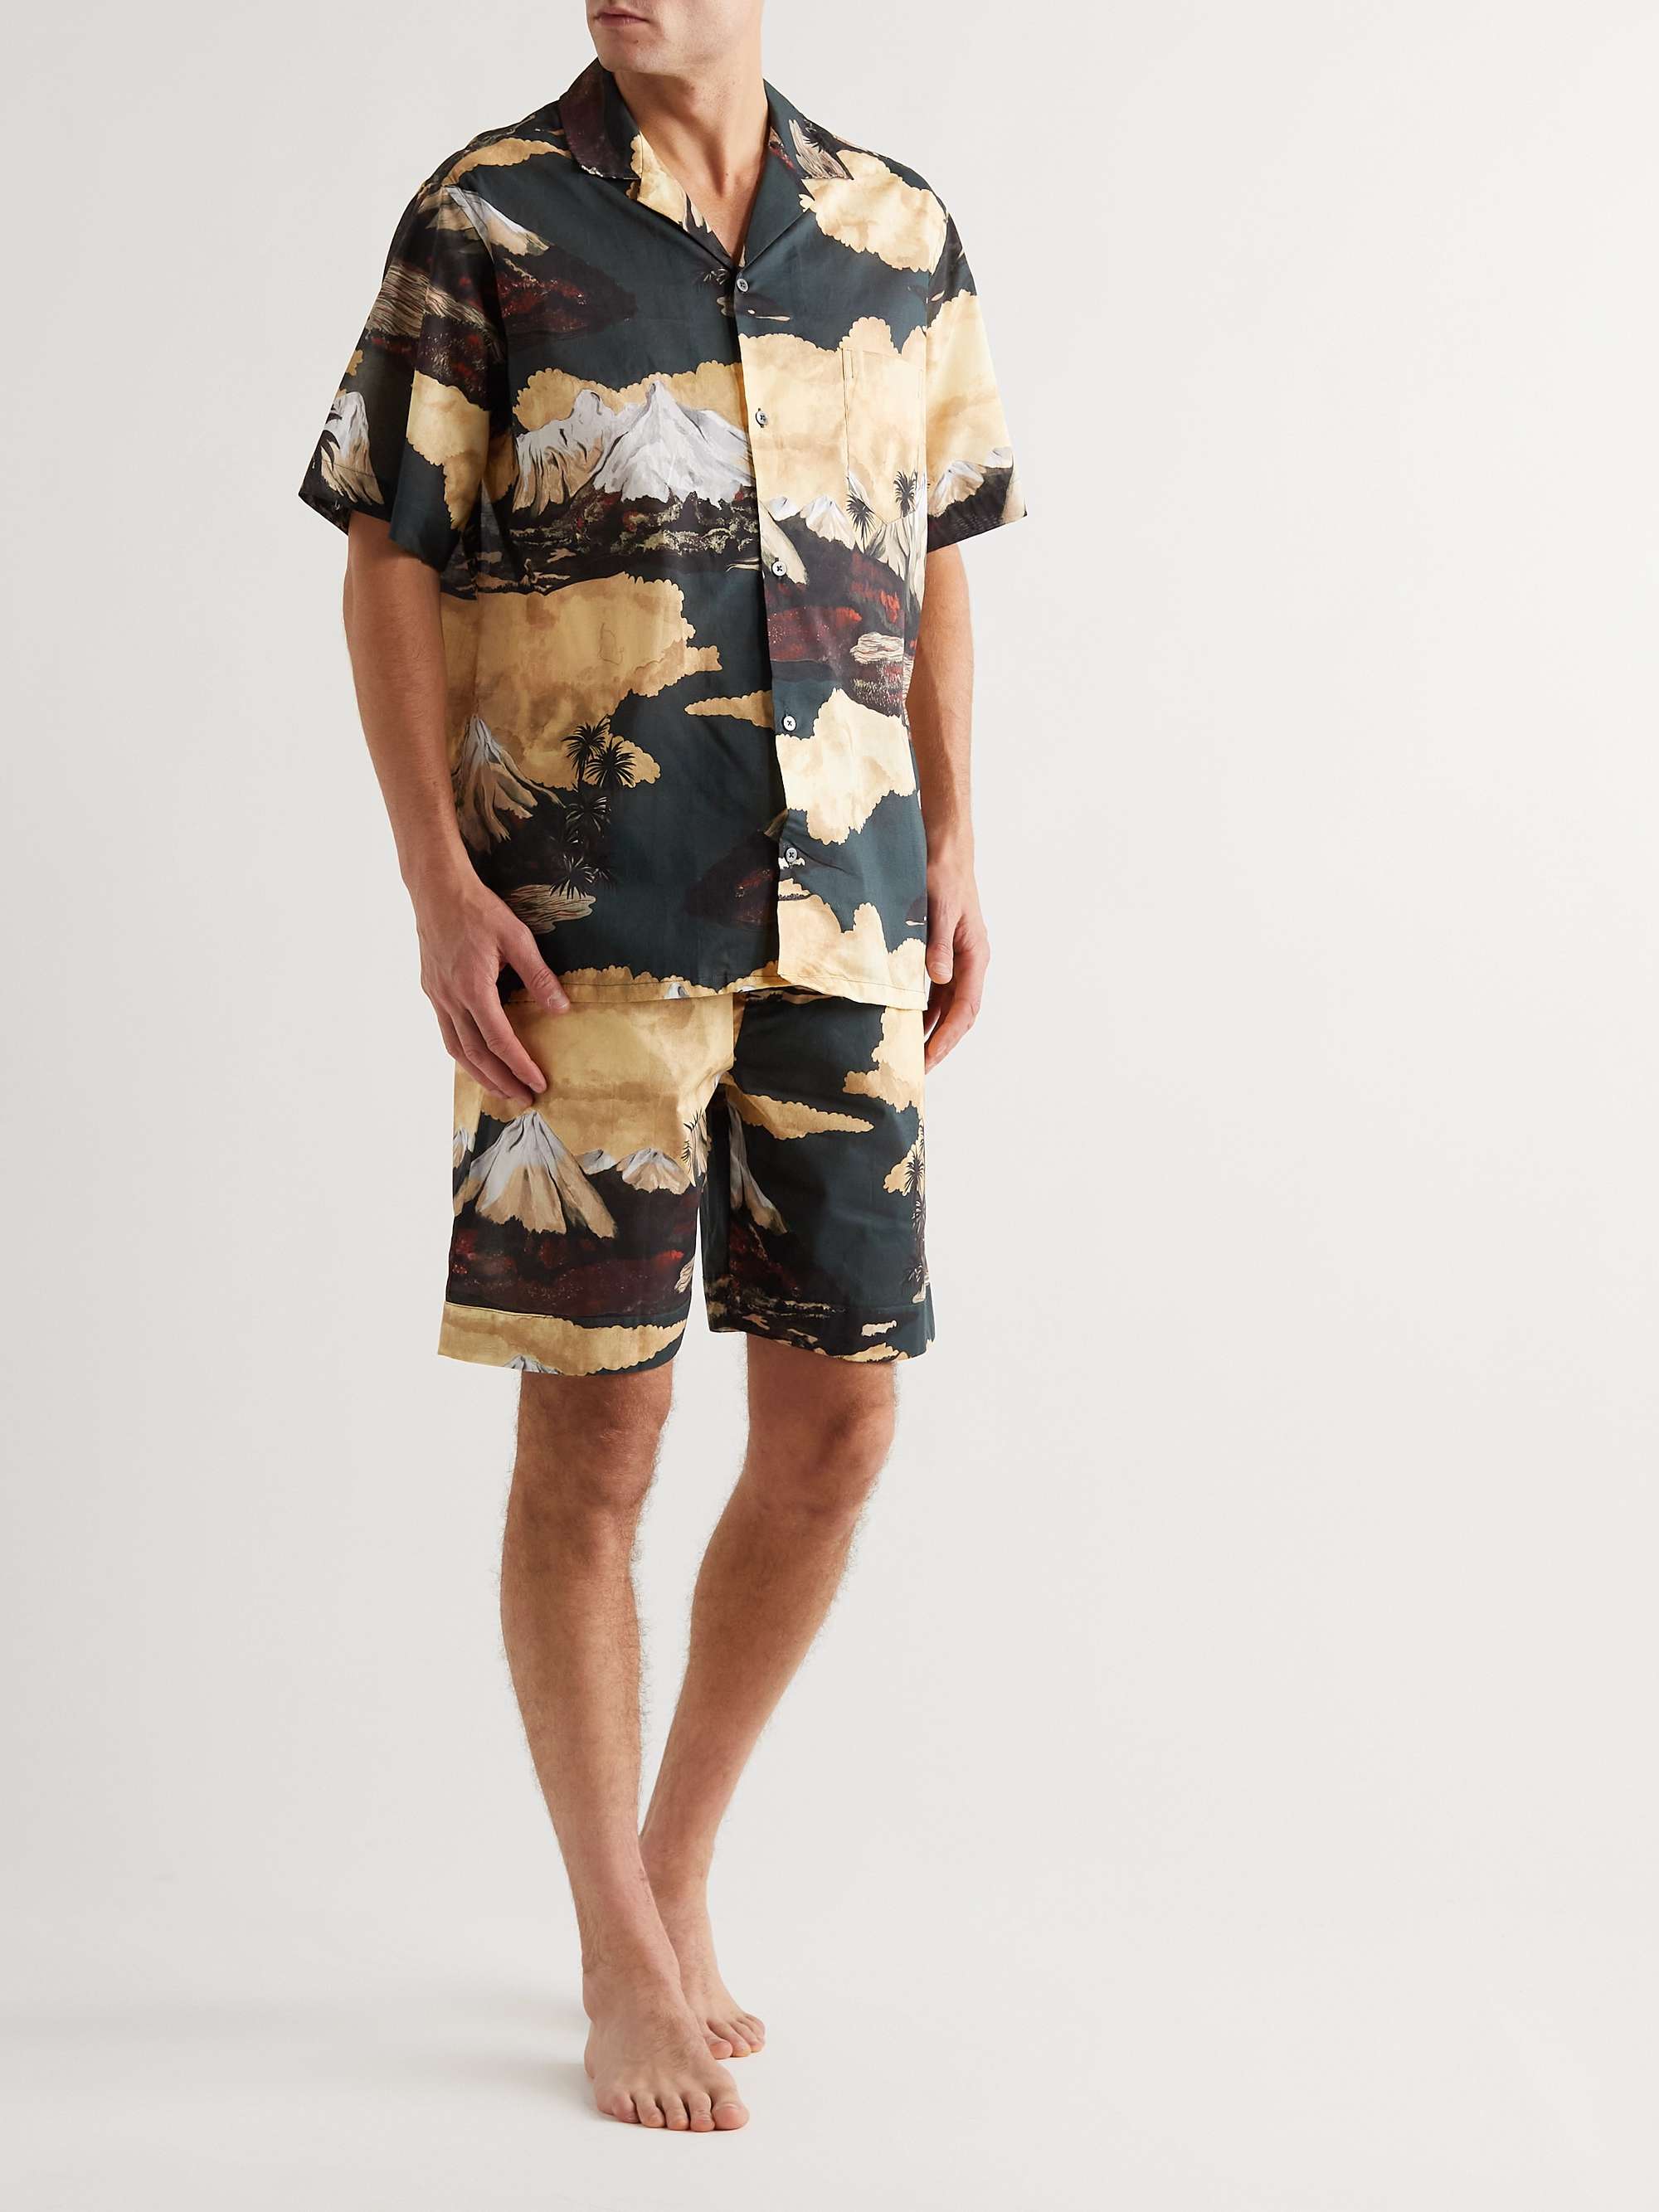 DESMOND & DEMPSEY Printed Linen Pyjama Set